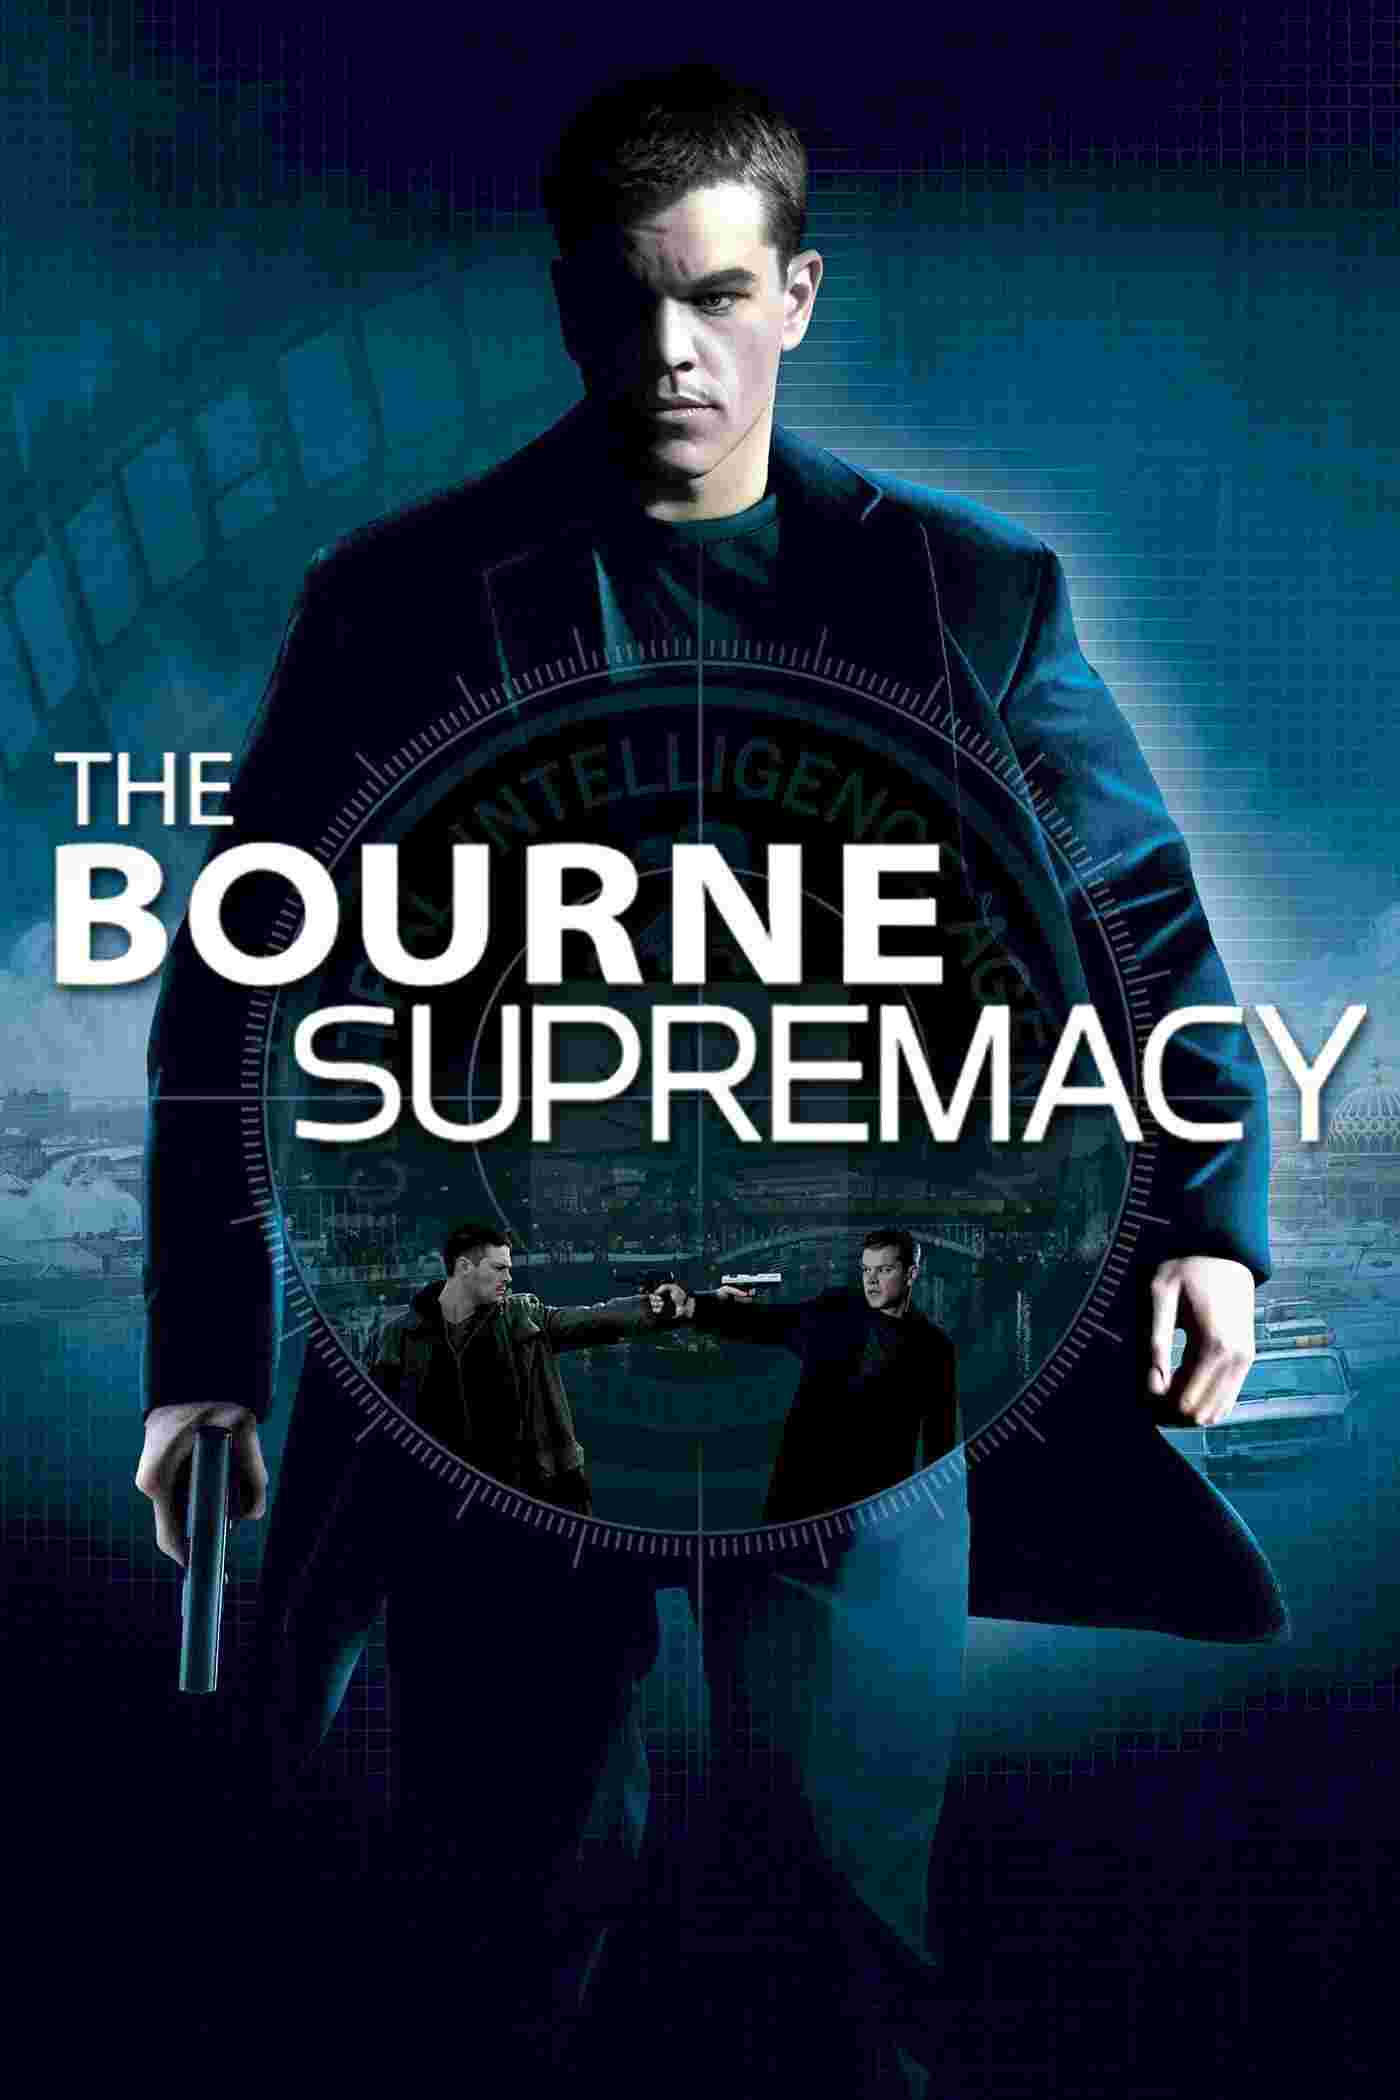 The Bourne Supremacy (2004) Matt Damon